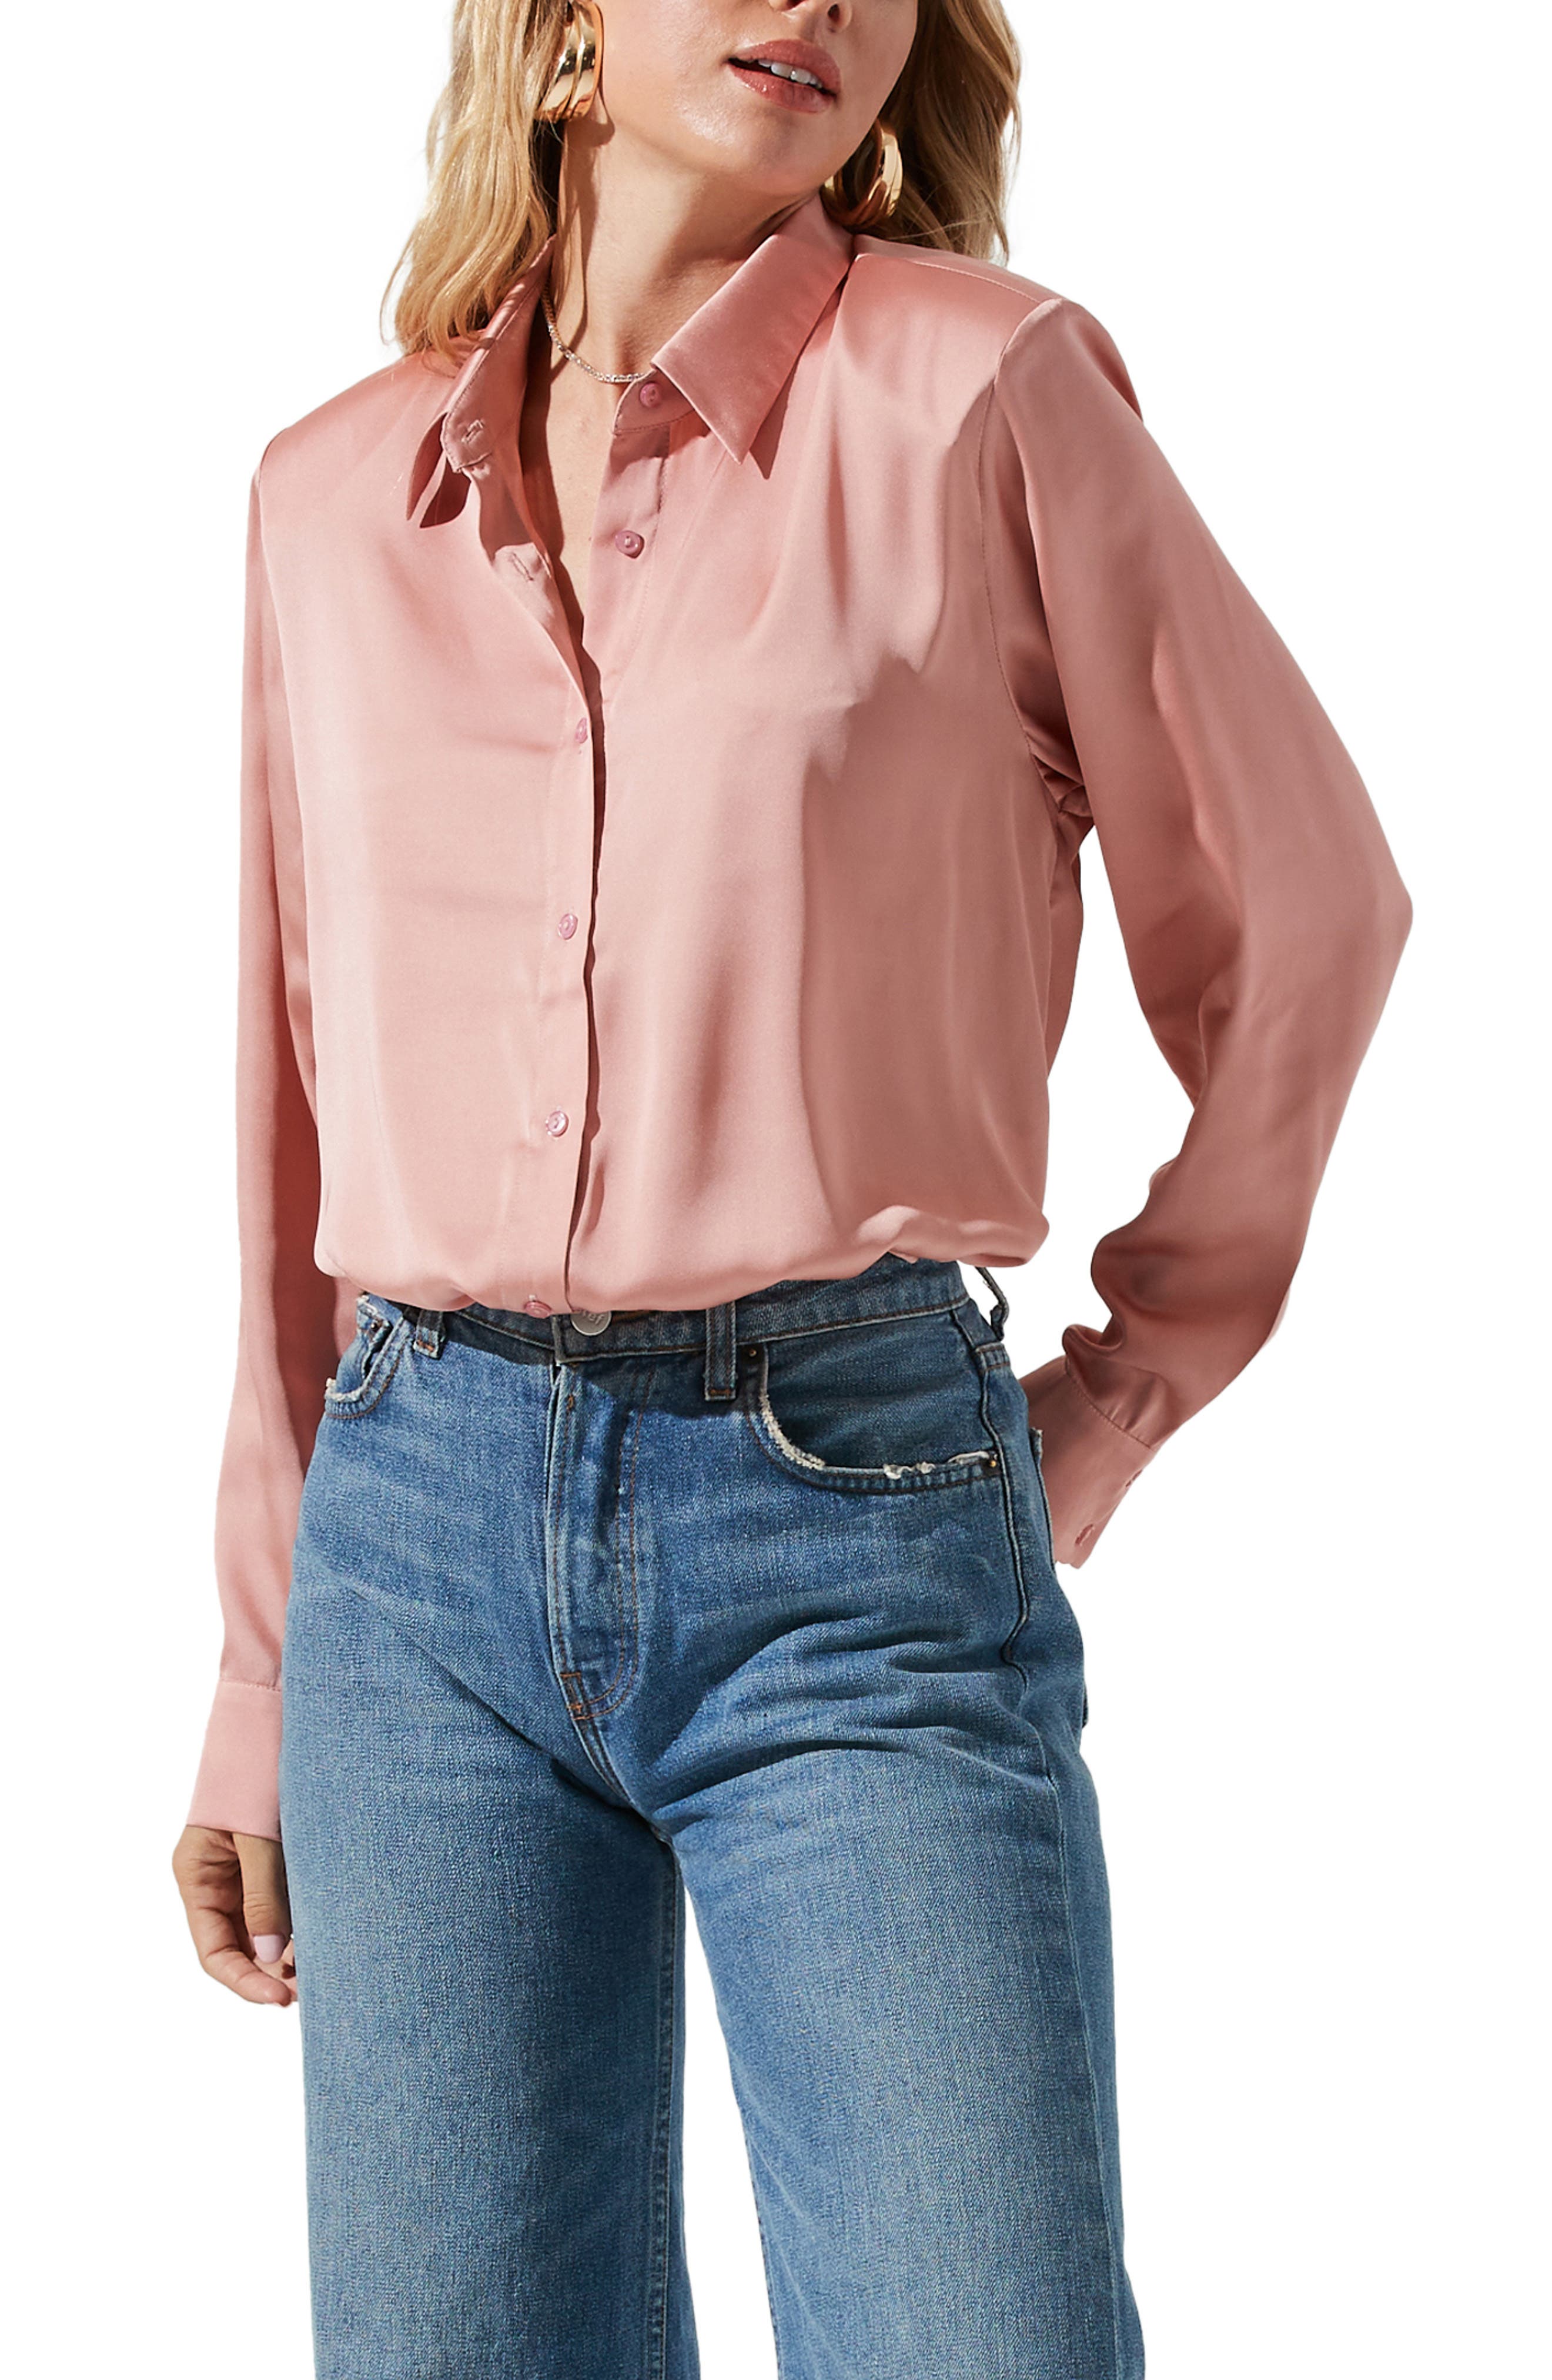 Suiteblanco belt Pink discount 84% WOMEN FASHION Accessories Belt Pink 